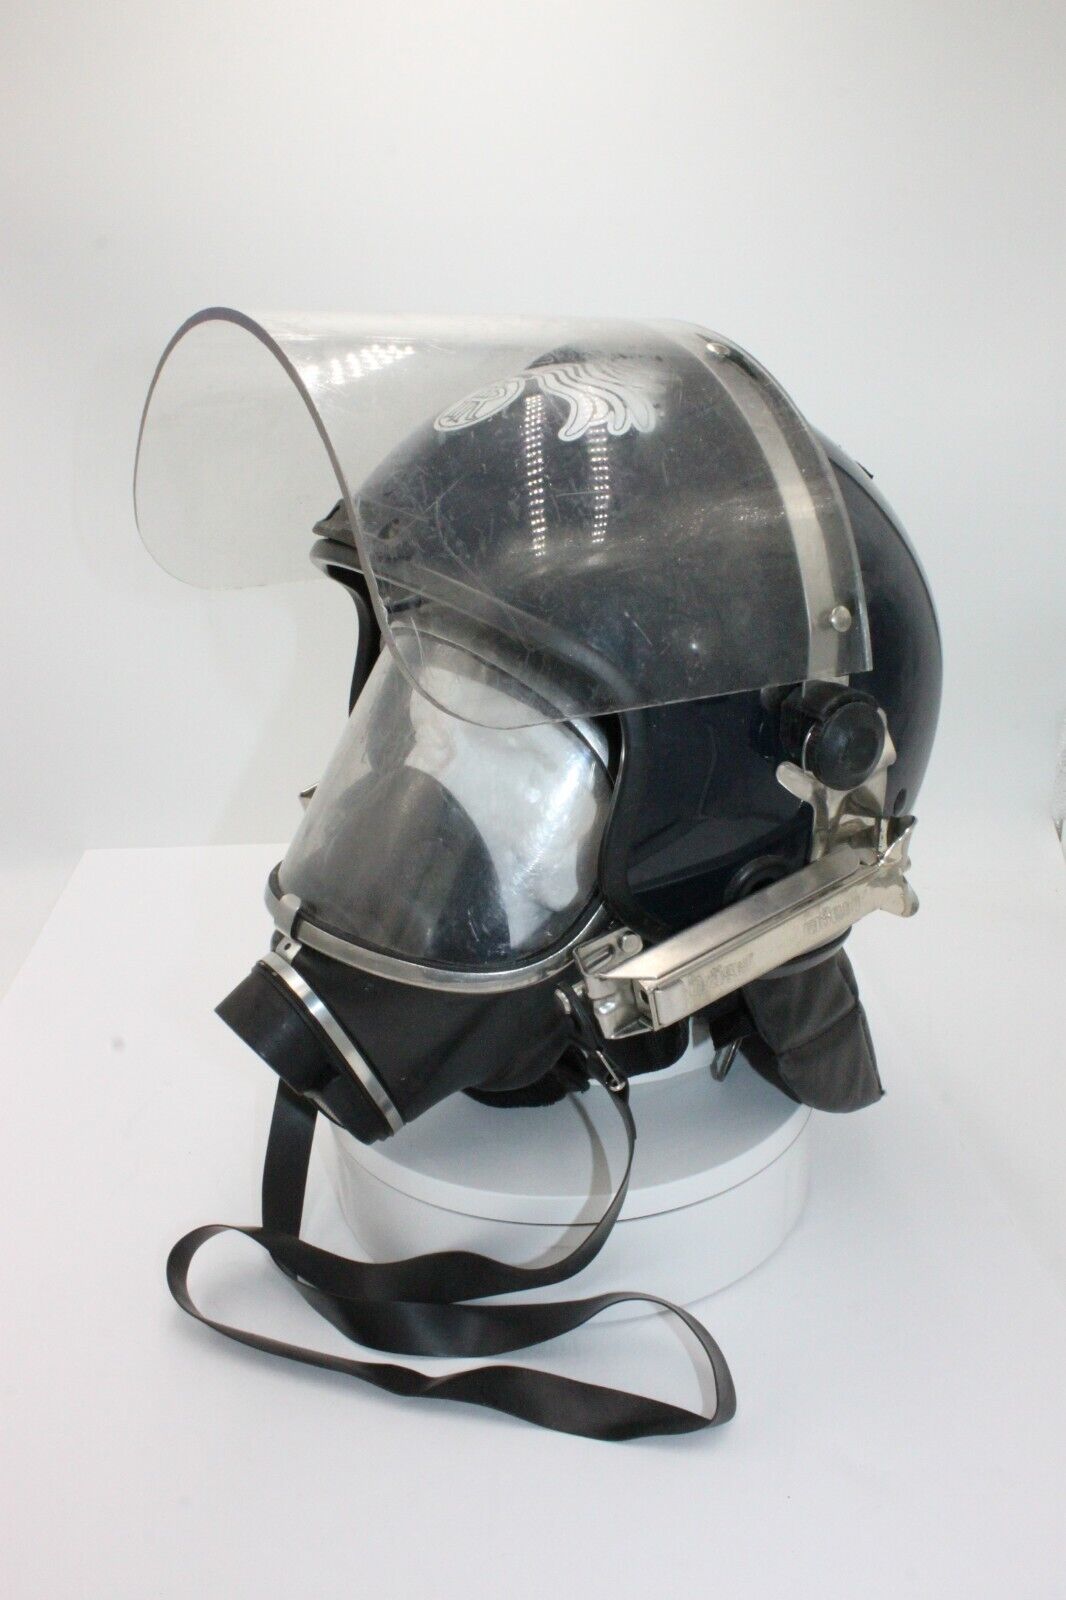 Italian/German Police Military Drager Gas Mask Nova S with Riot Helmet 40mm NATO